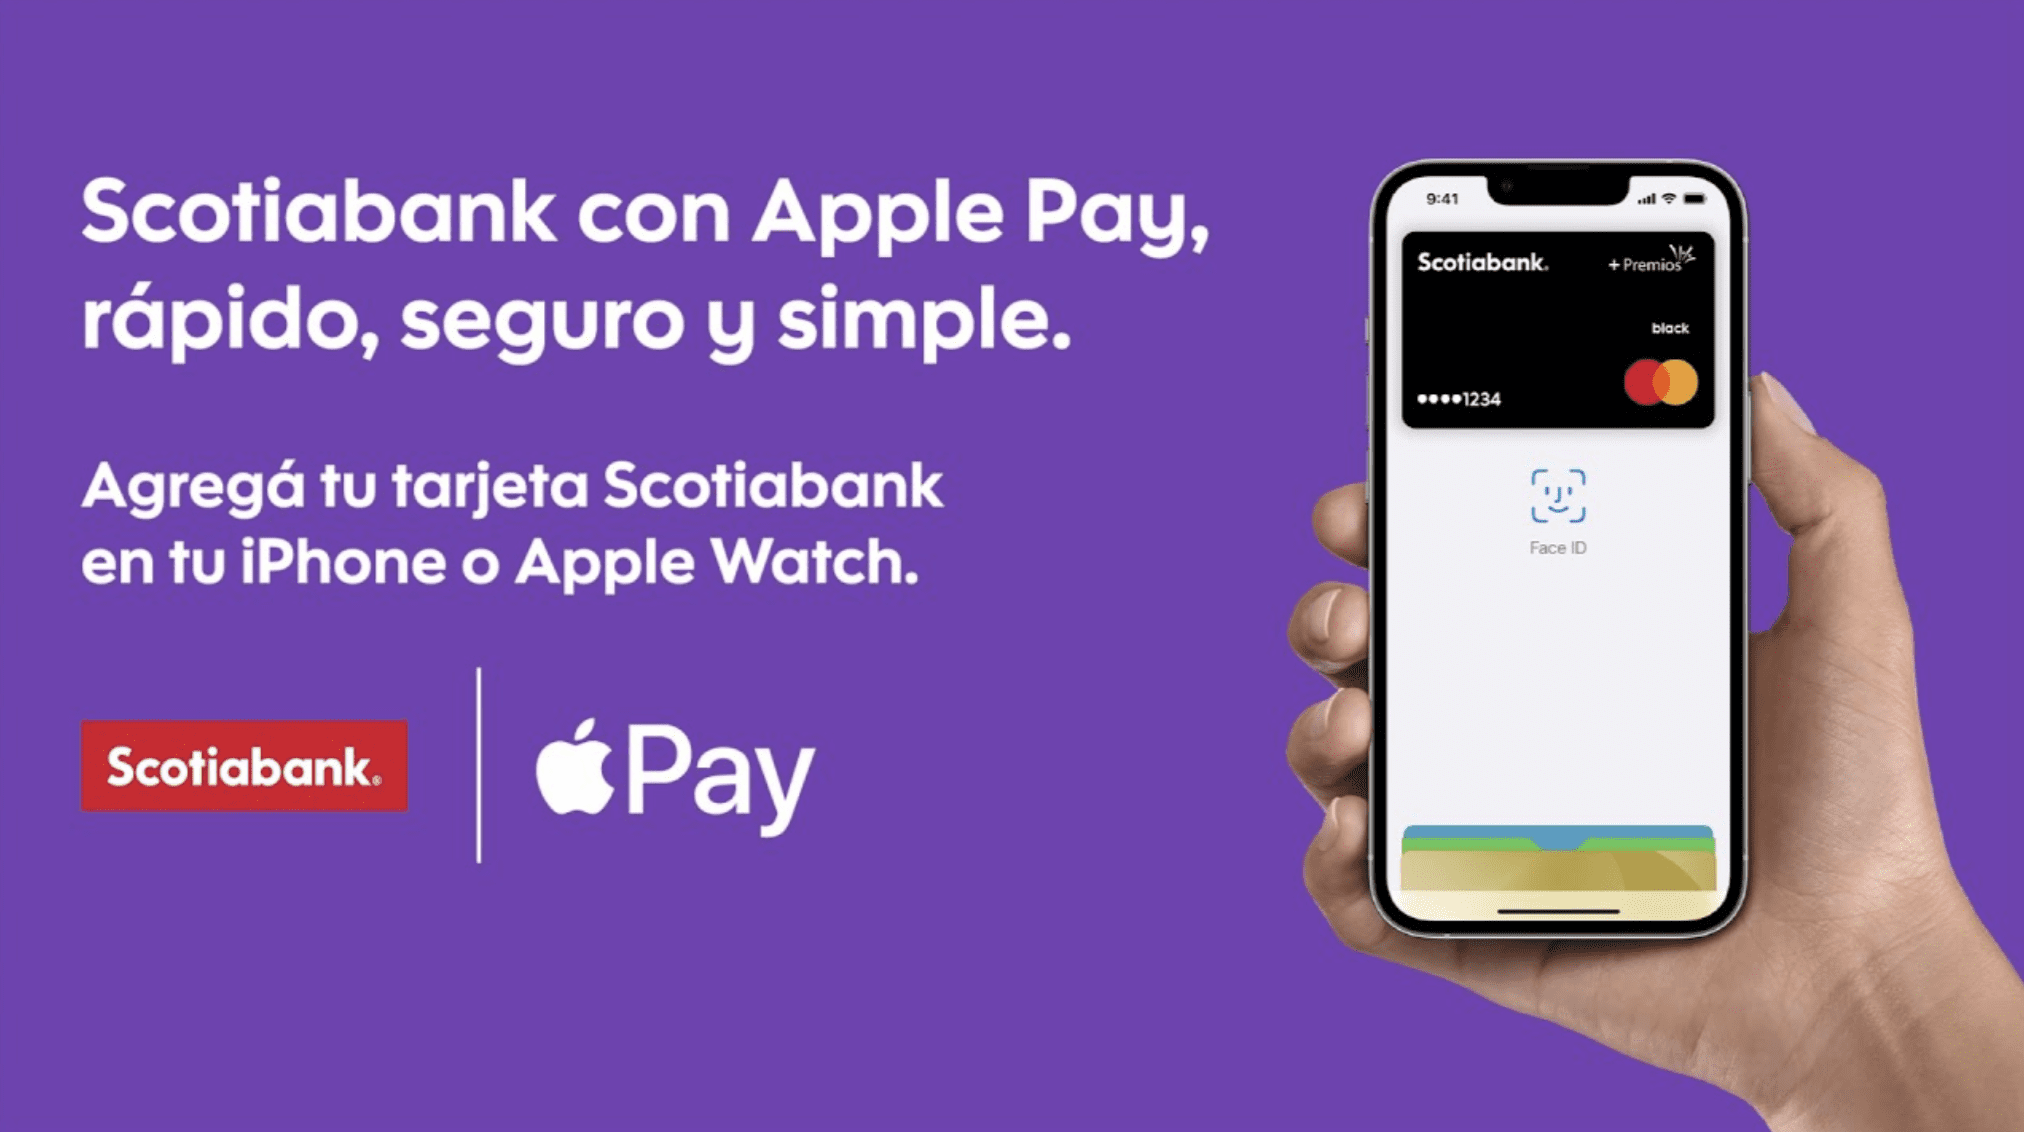 Anuncio de Apple Pay de Scotiabank Argentina